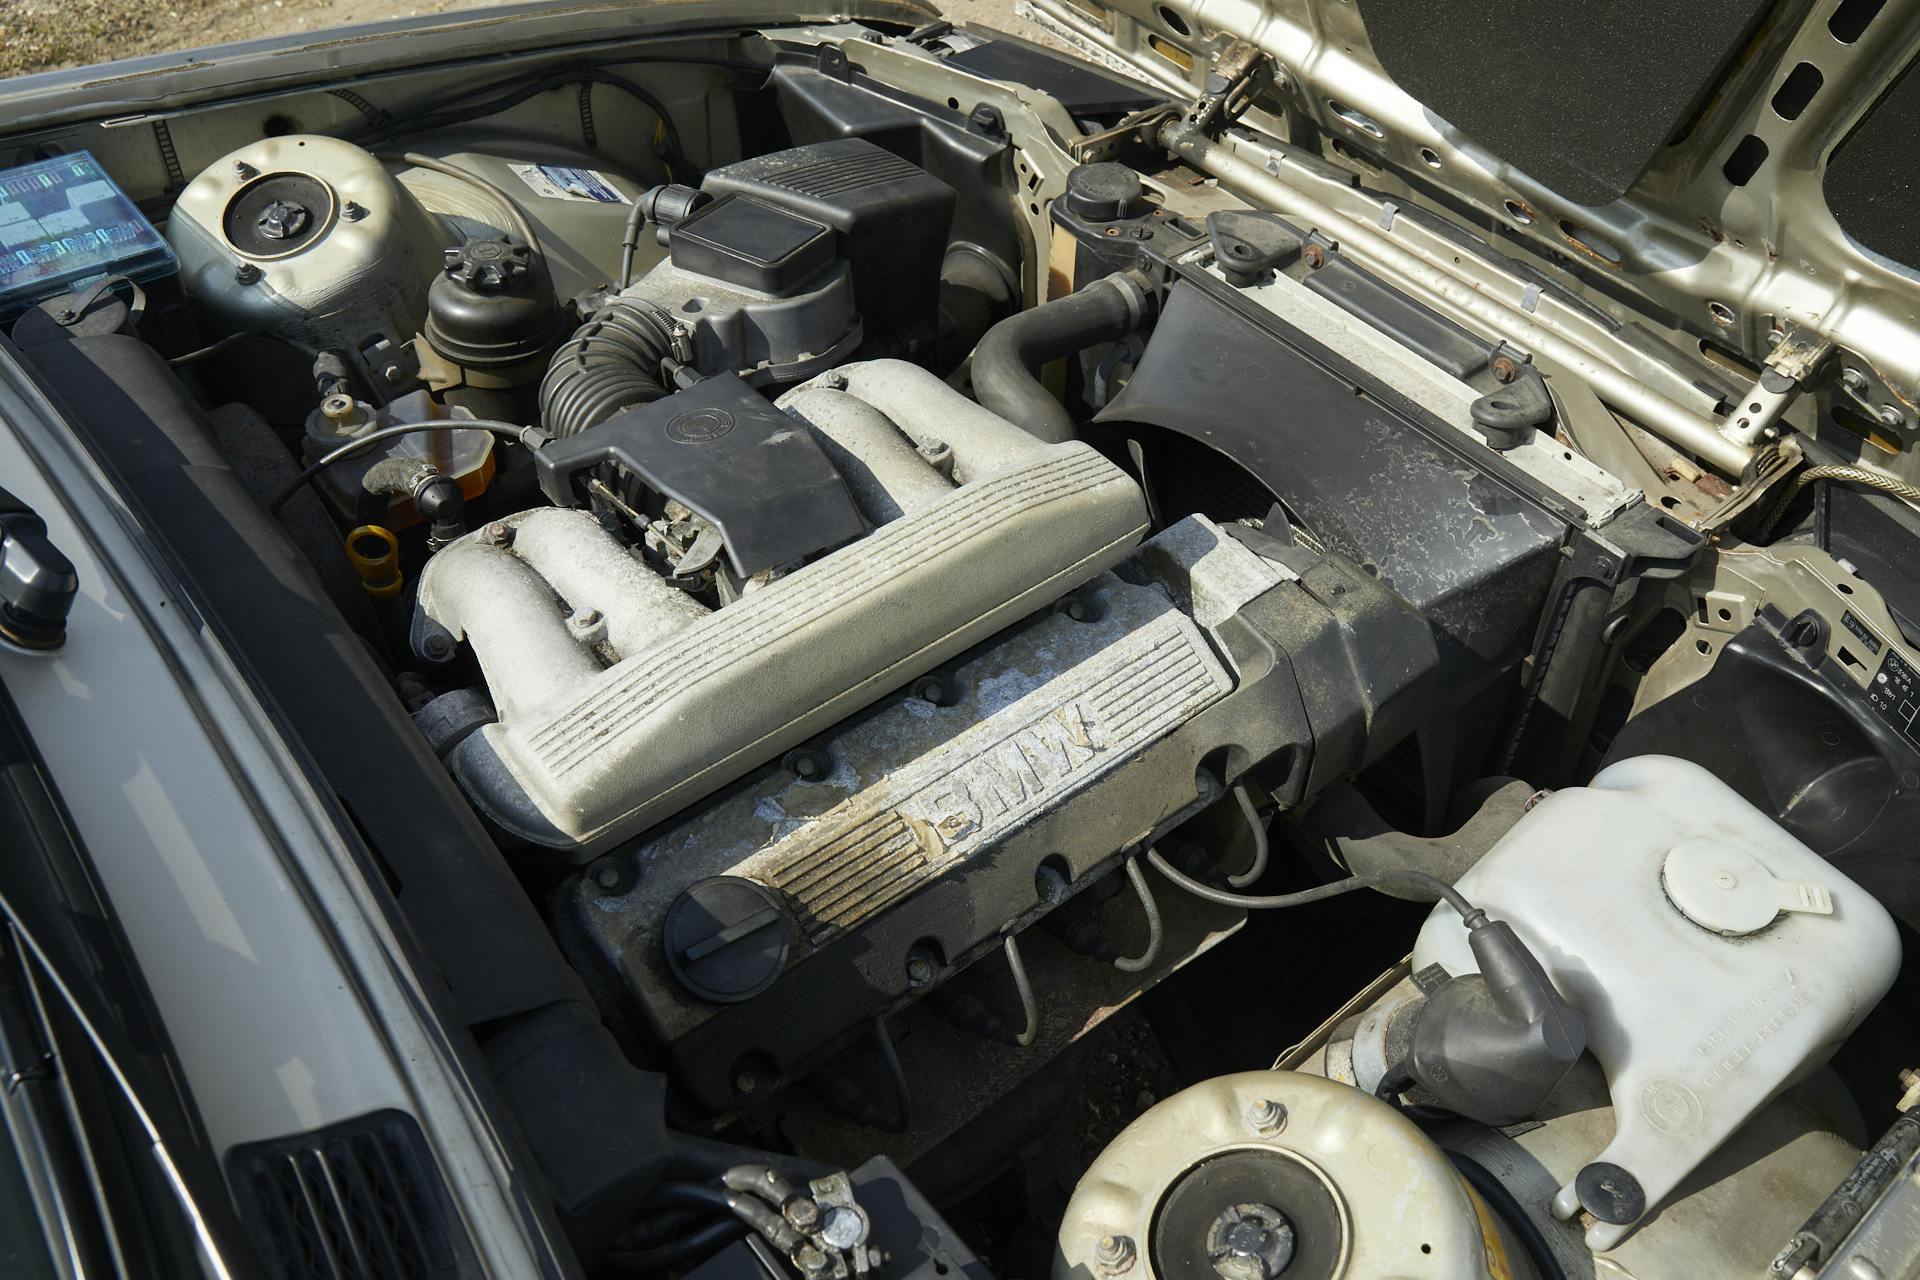 BMW 3-series engine bay